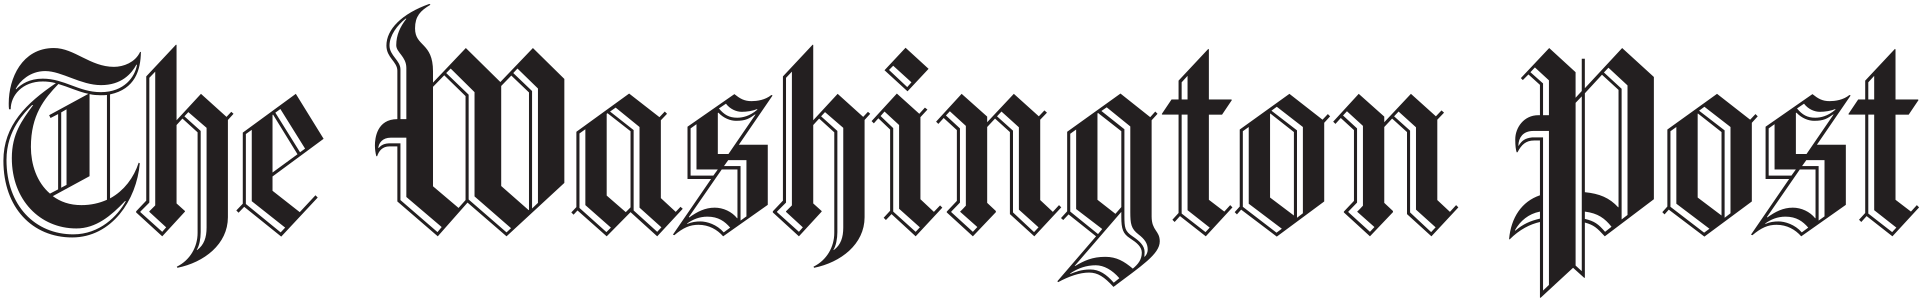 The Logo of The Washington Post Newspaper.svg